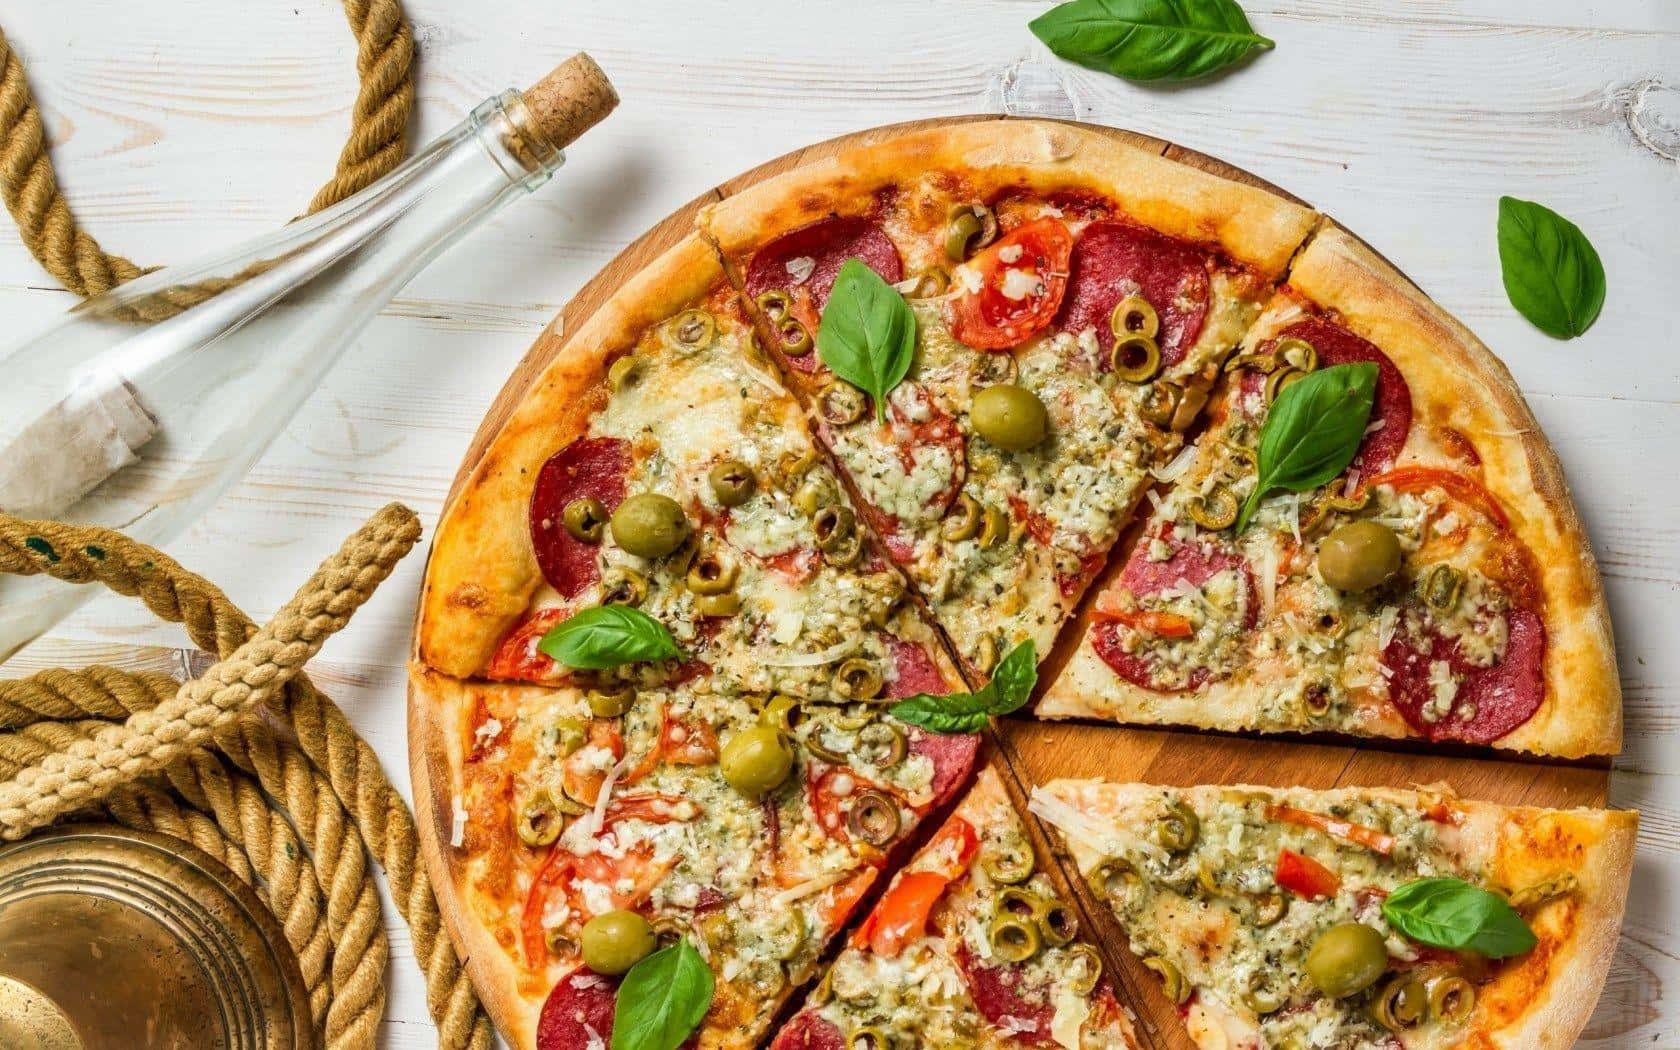 Enjoy a delicious slice of Pizza Hut pizza!